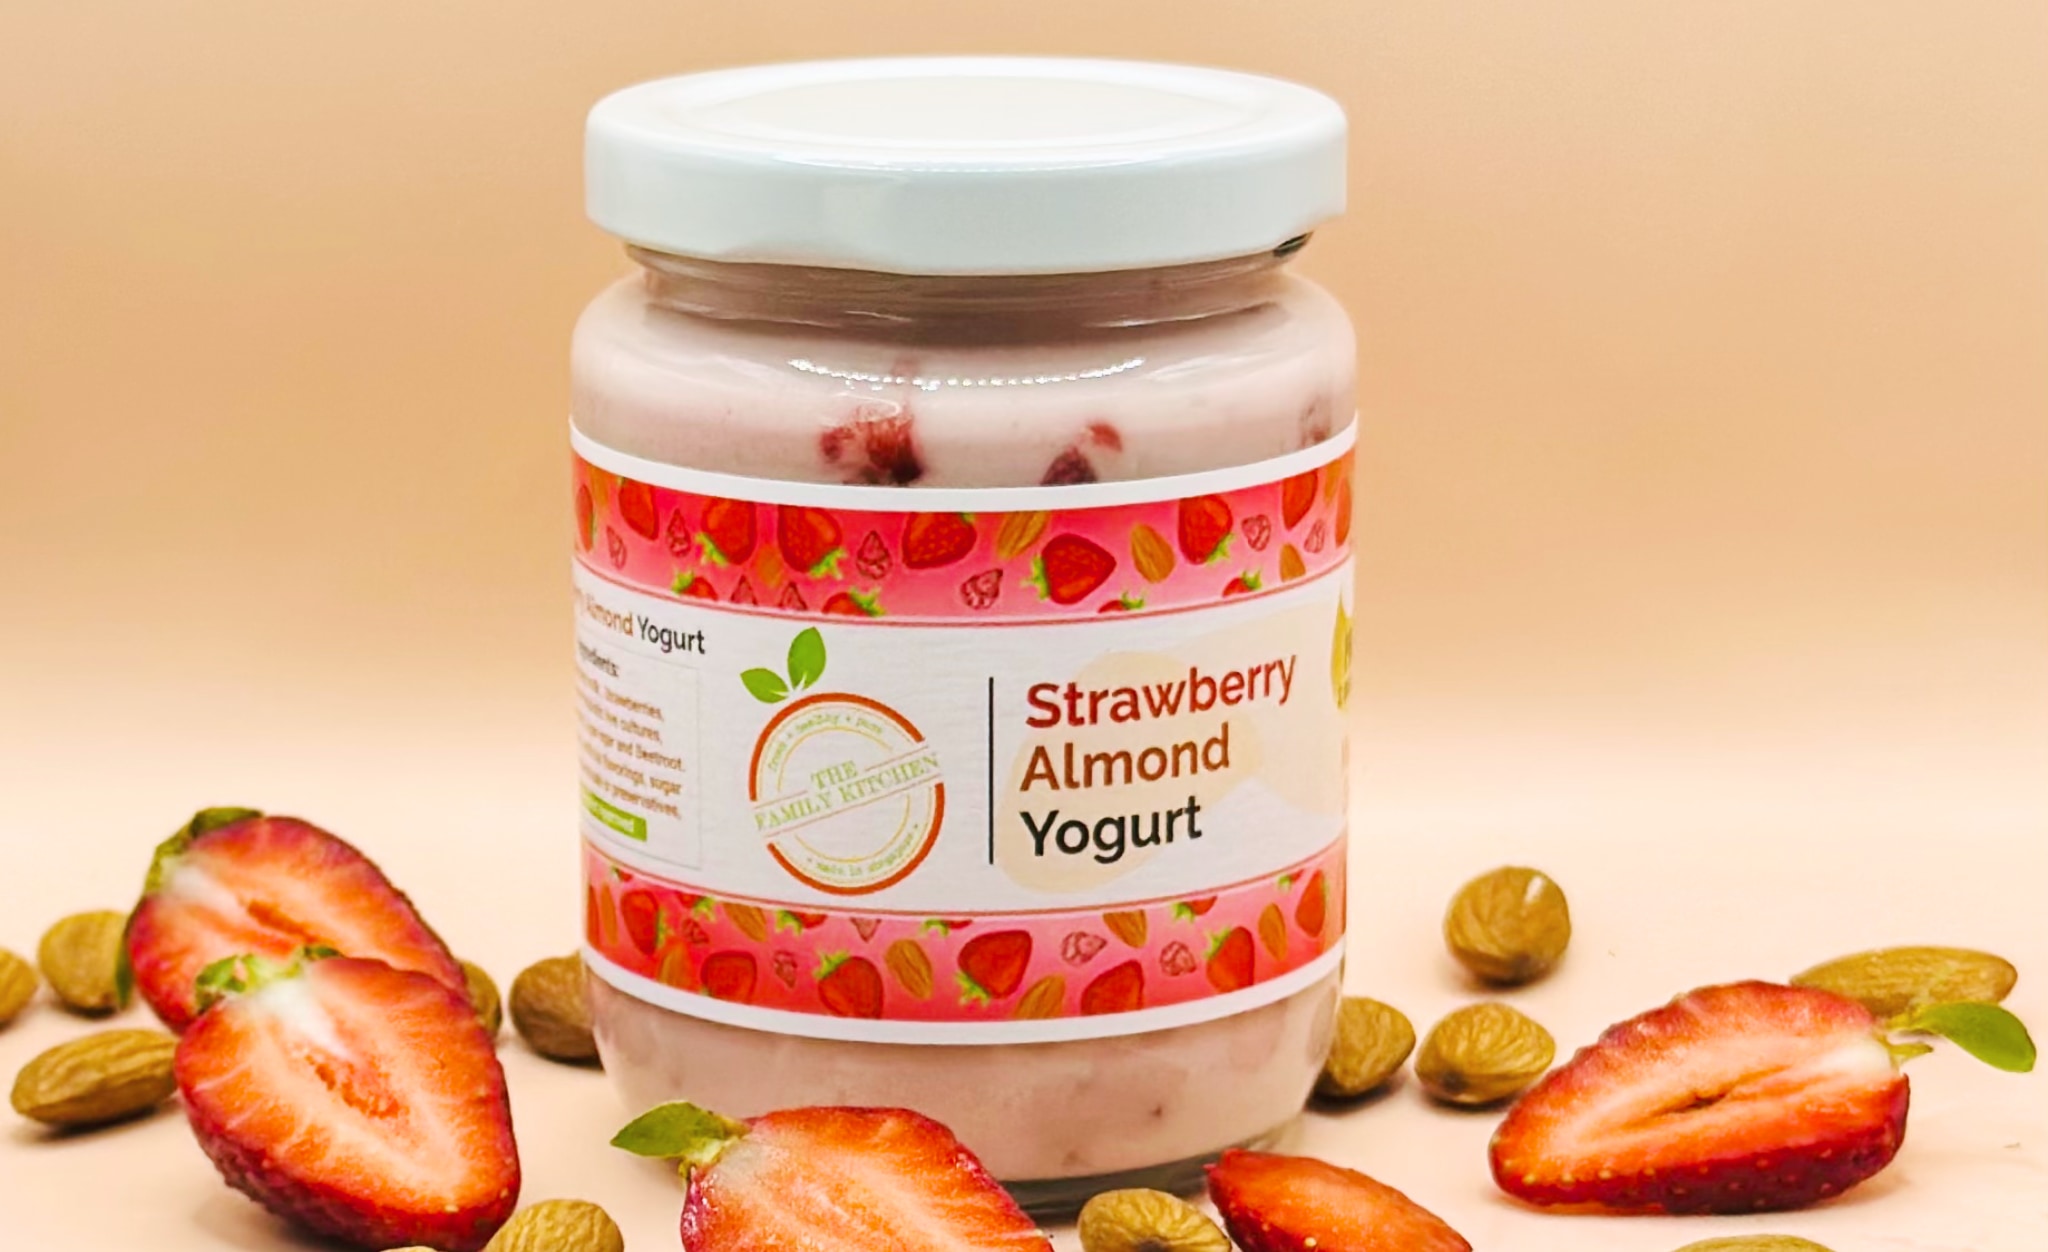 Strawberry Almond Yogurt by The Family Kitchen, Singapore